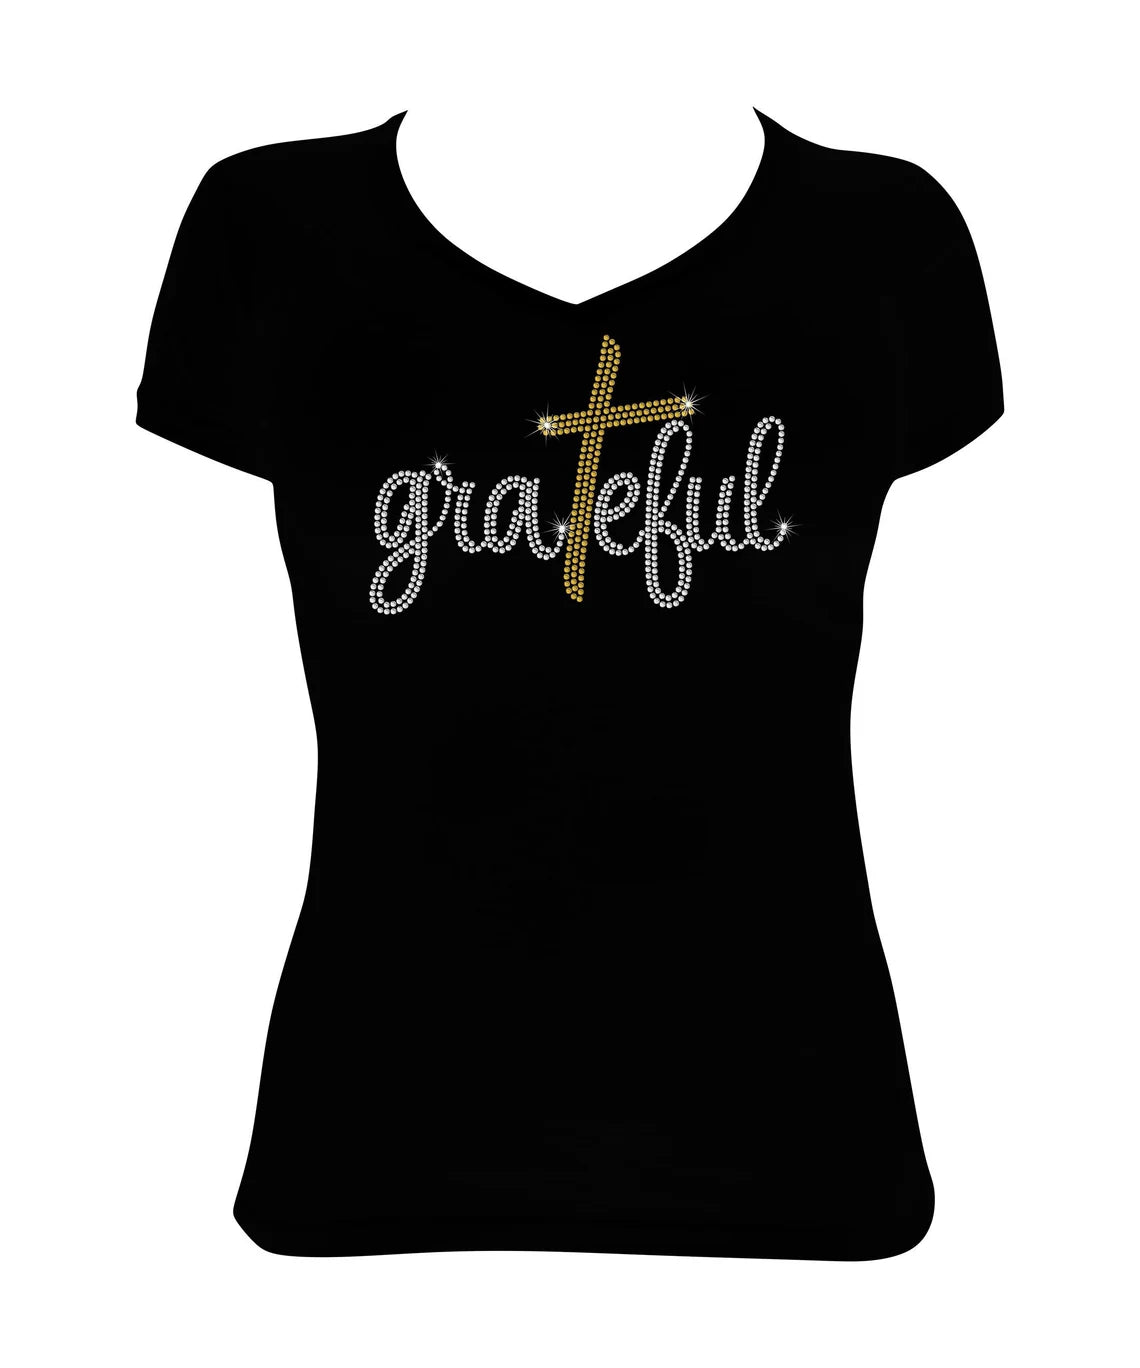 Grateful Heart Graphic T-Shirt In Black